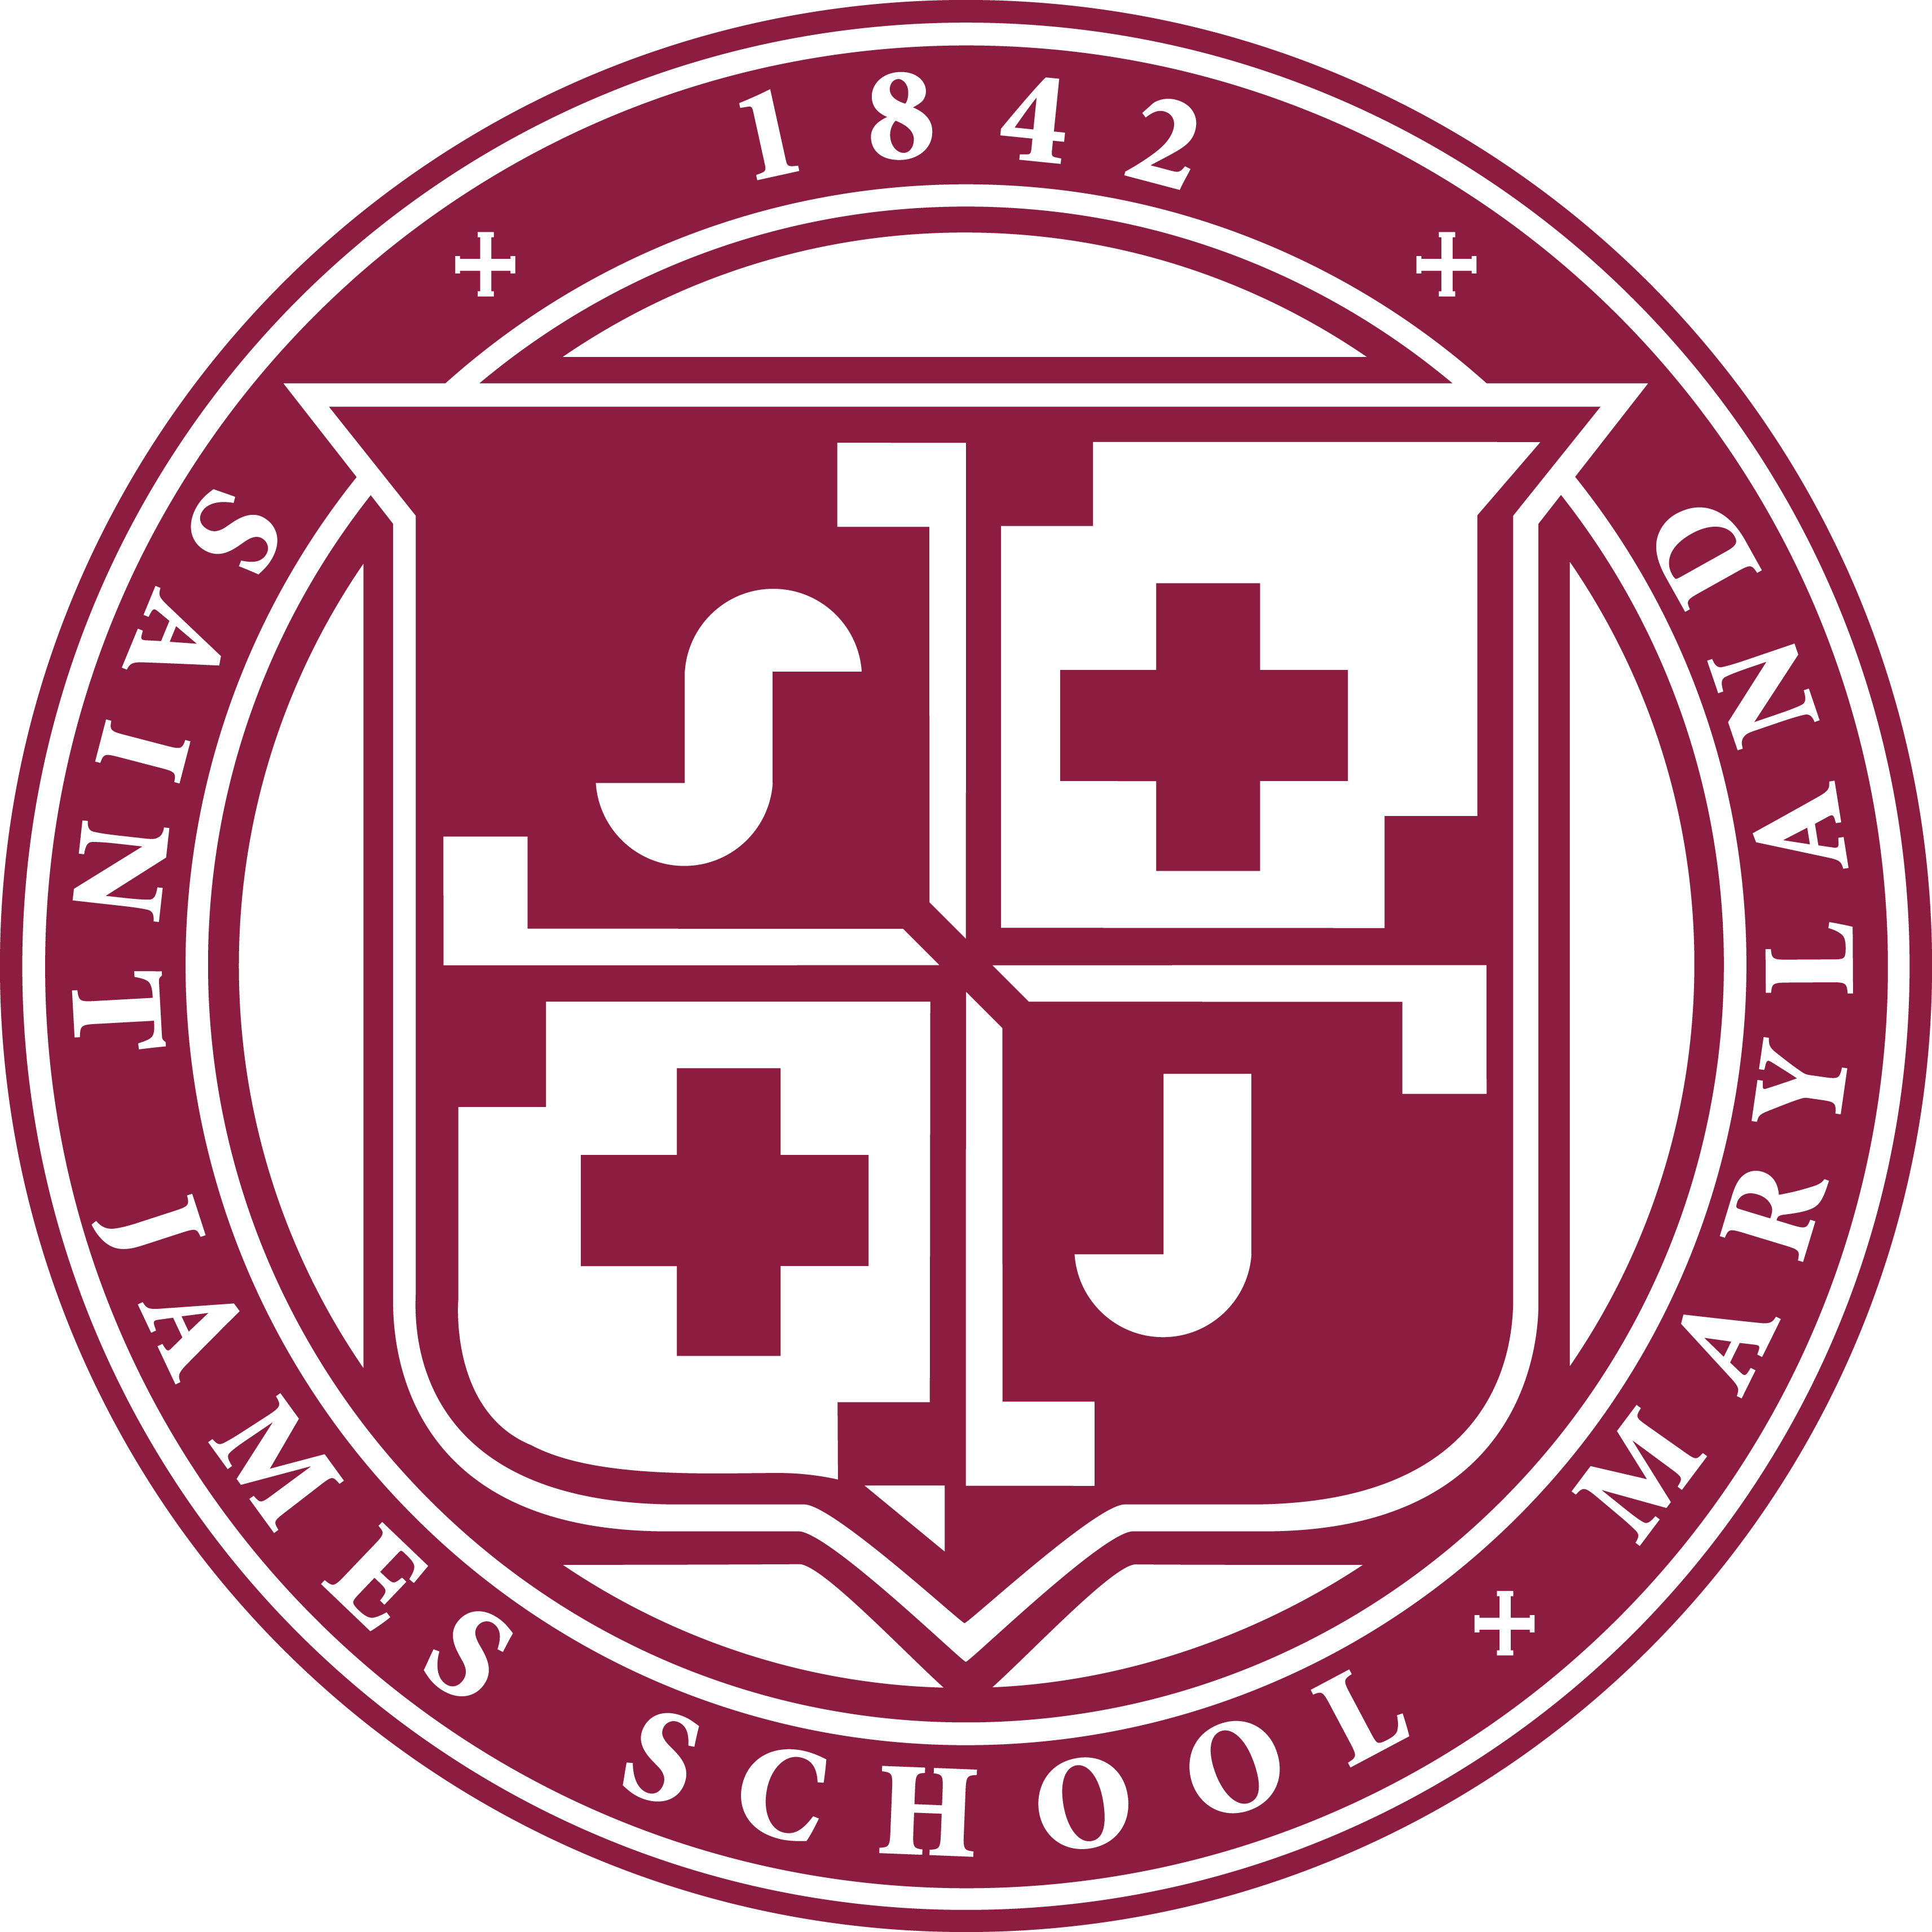 Saint James School